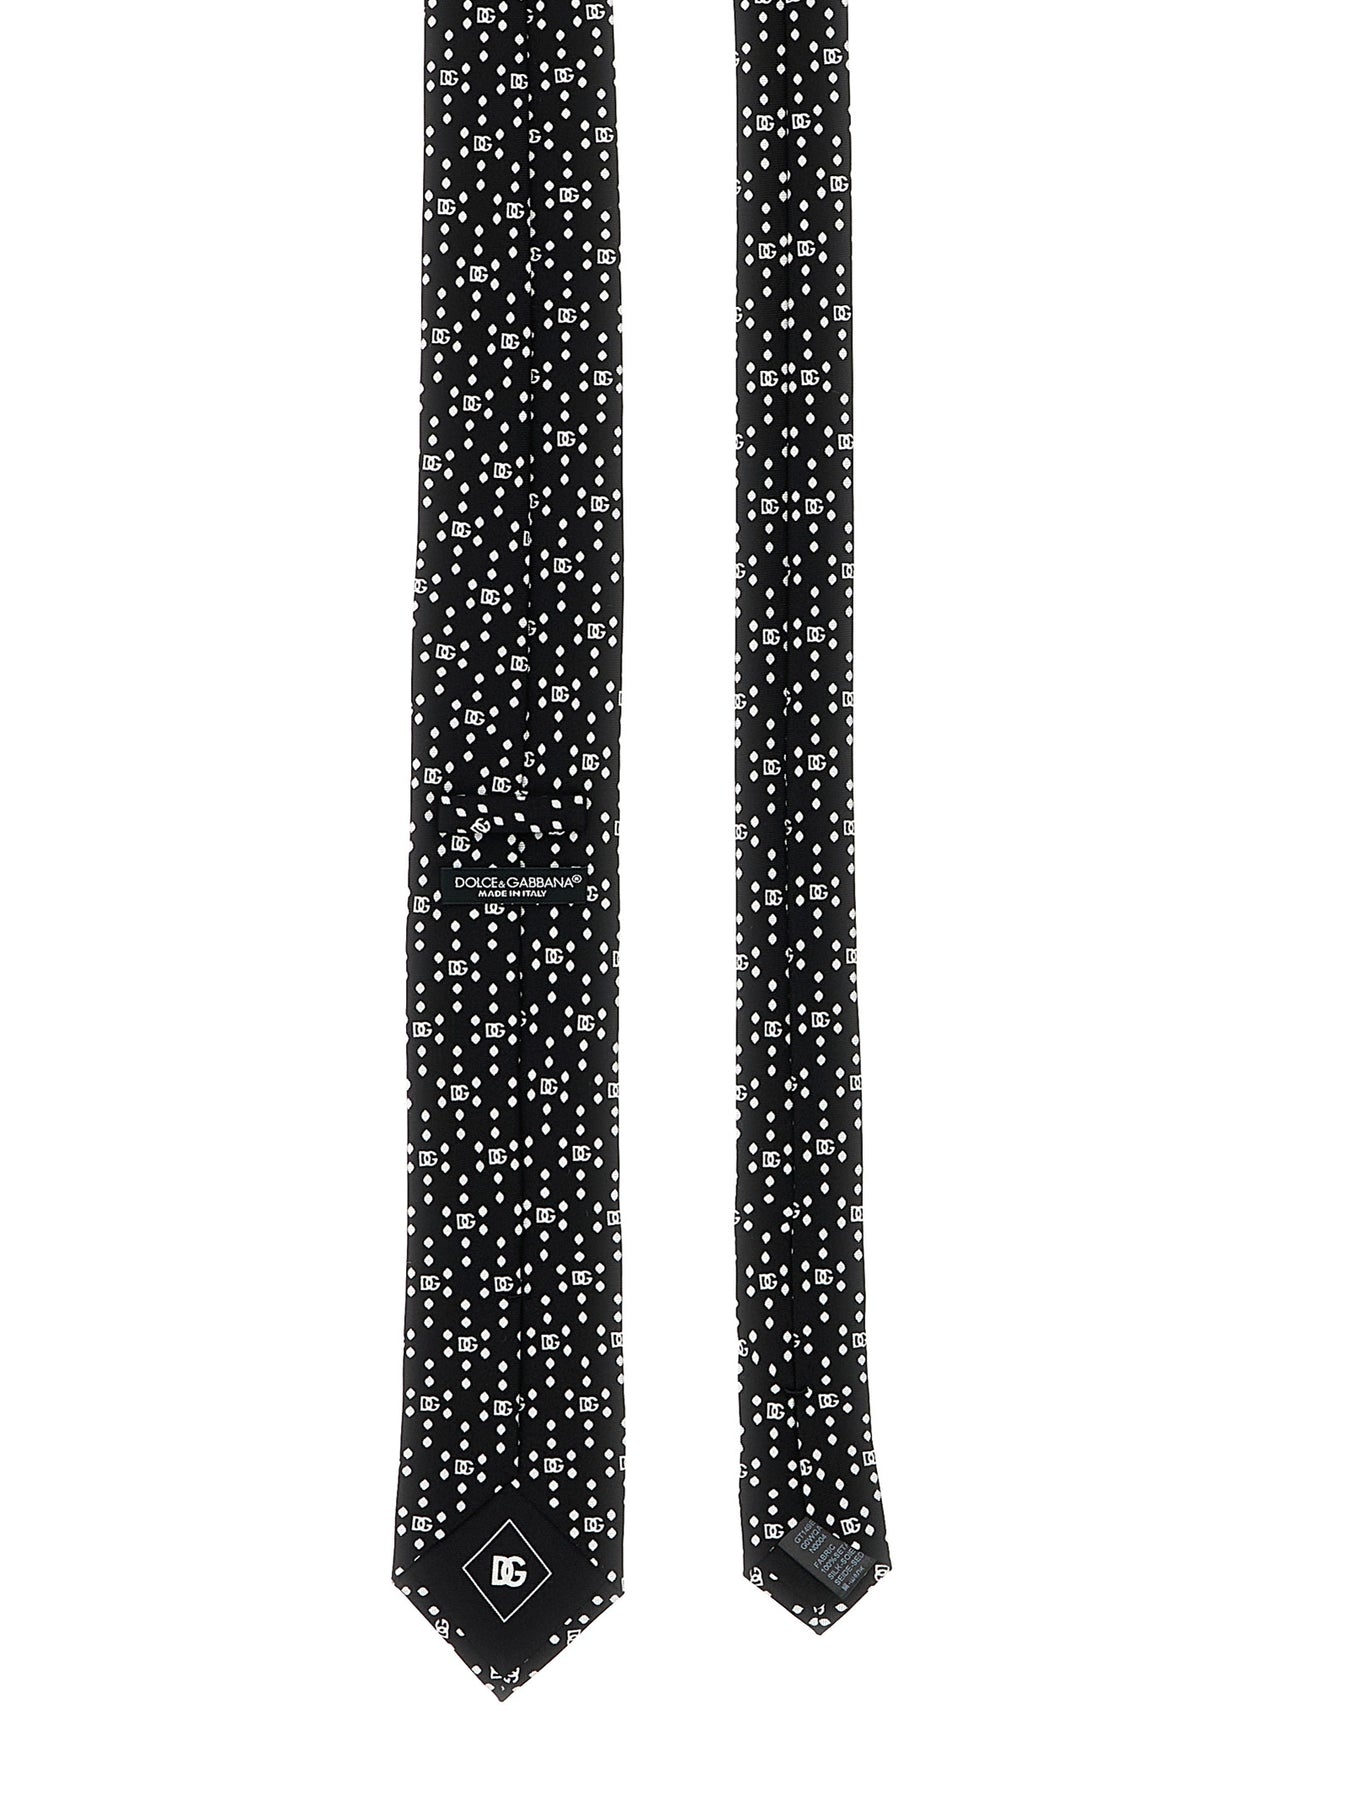 Logo Print Tie Ties, Papillon White/Black - 2